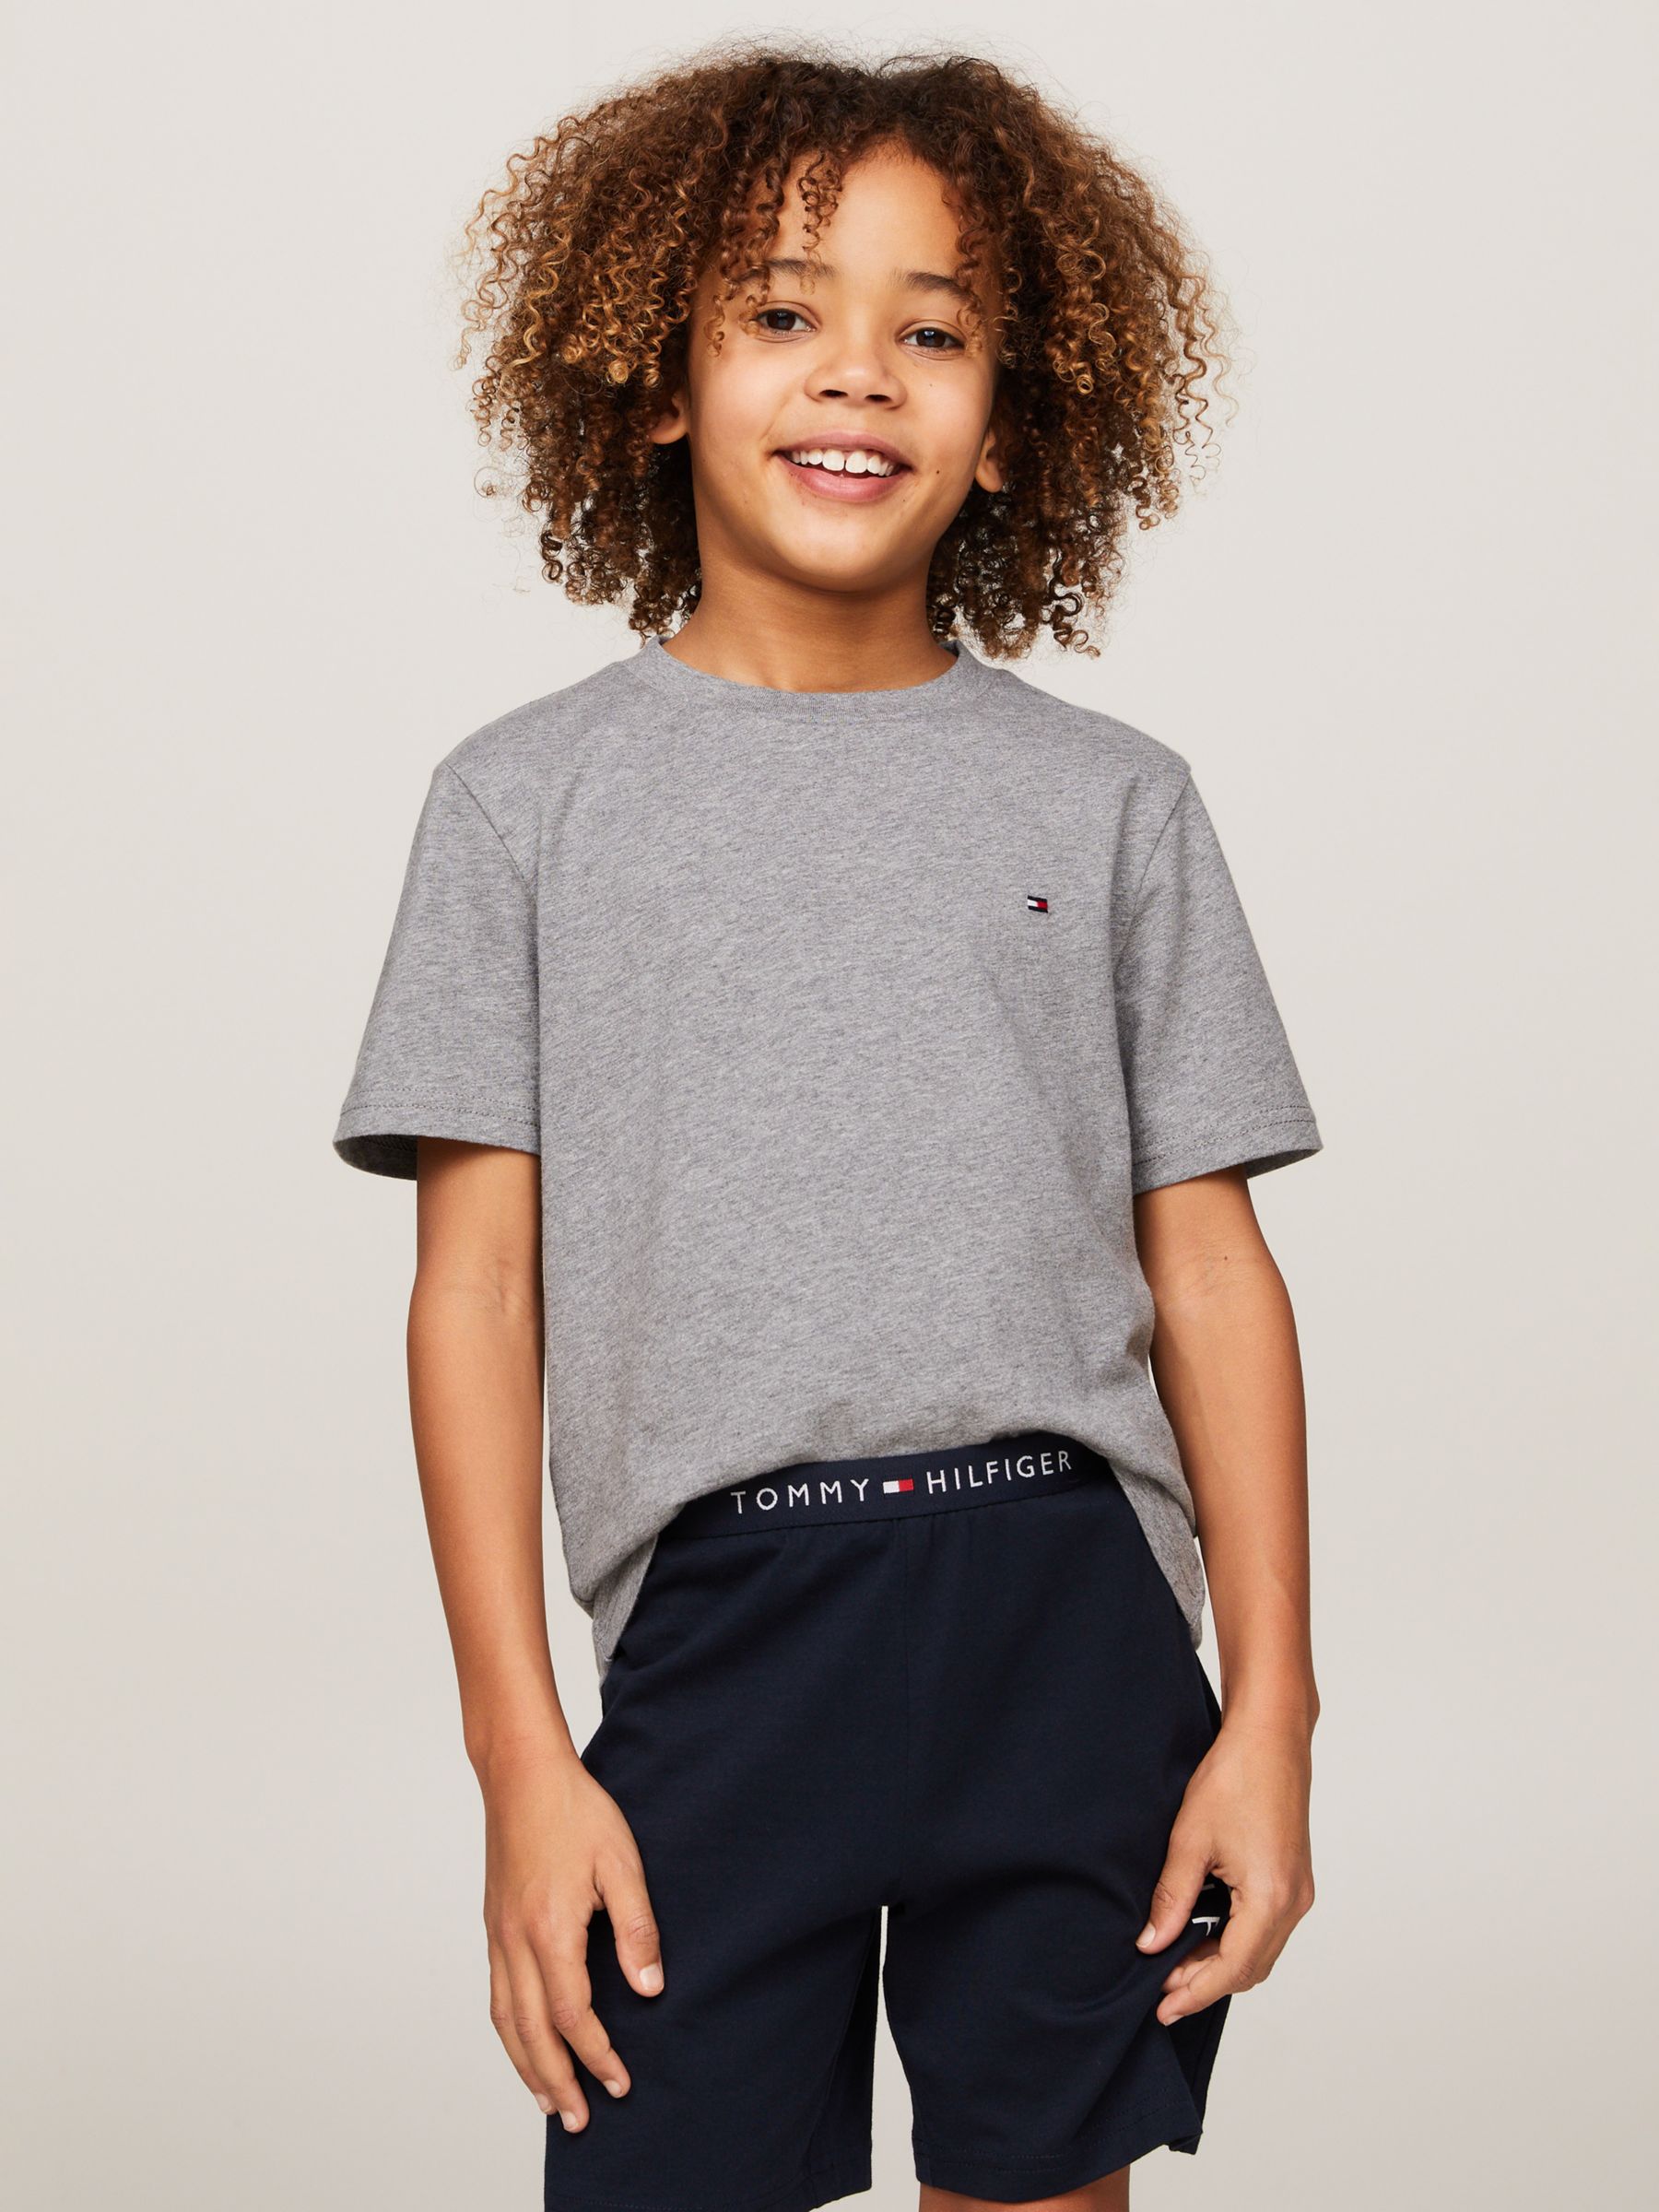 Tommy Hilfiger Boy's 2 Pack T-Shirts, Grey/Black at John Lewis & Partners